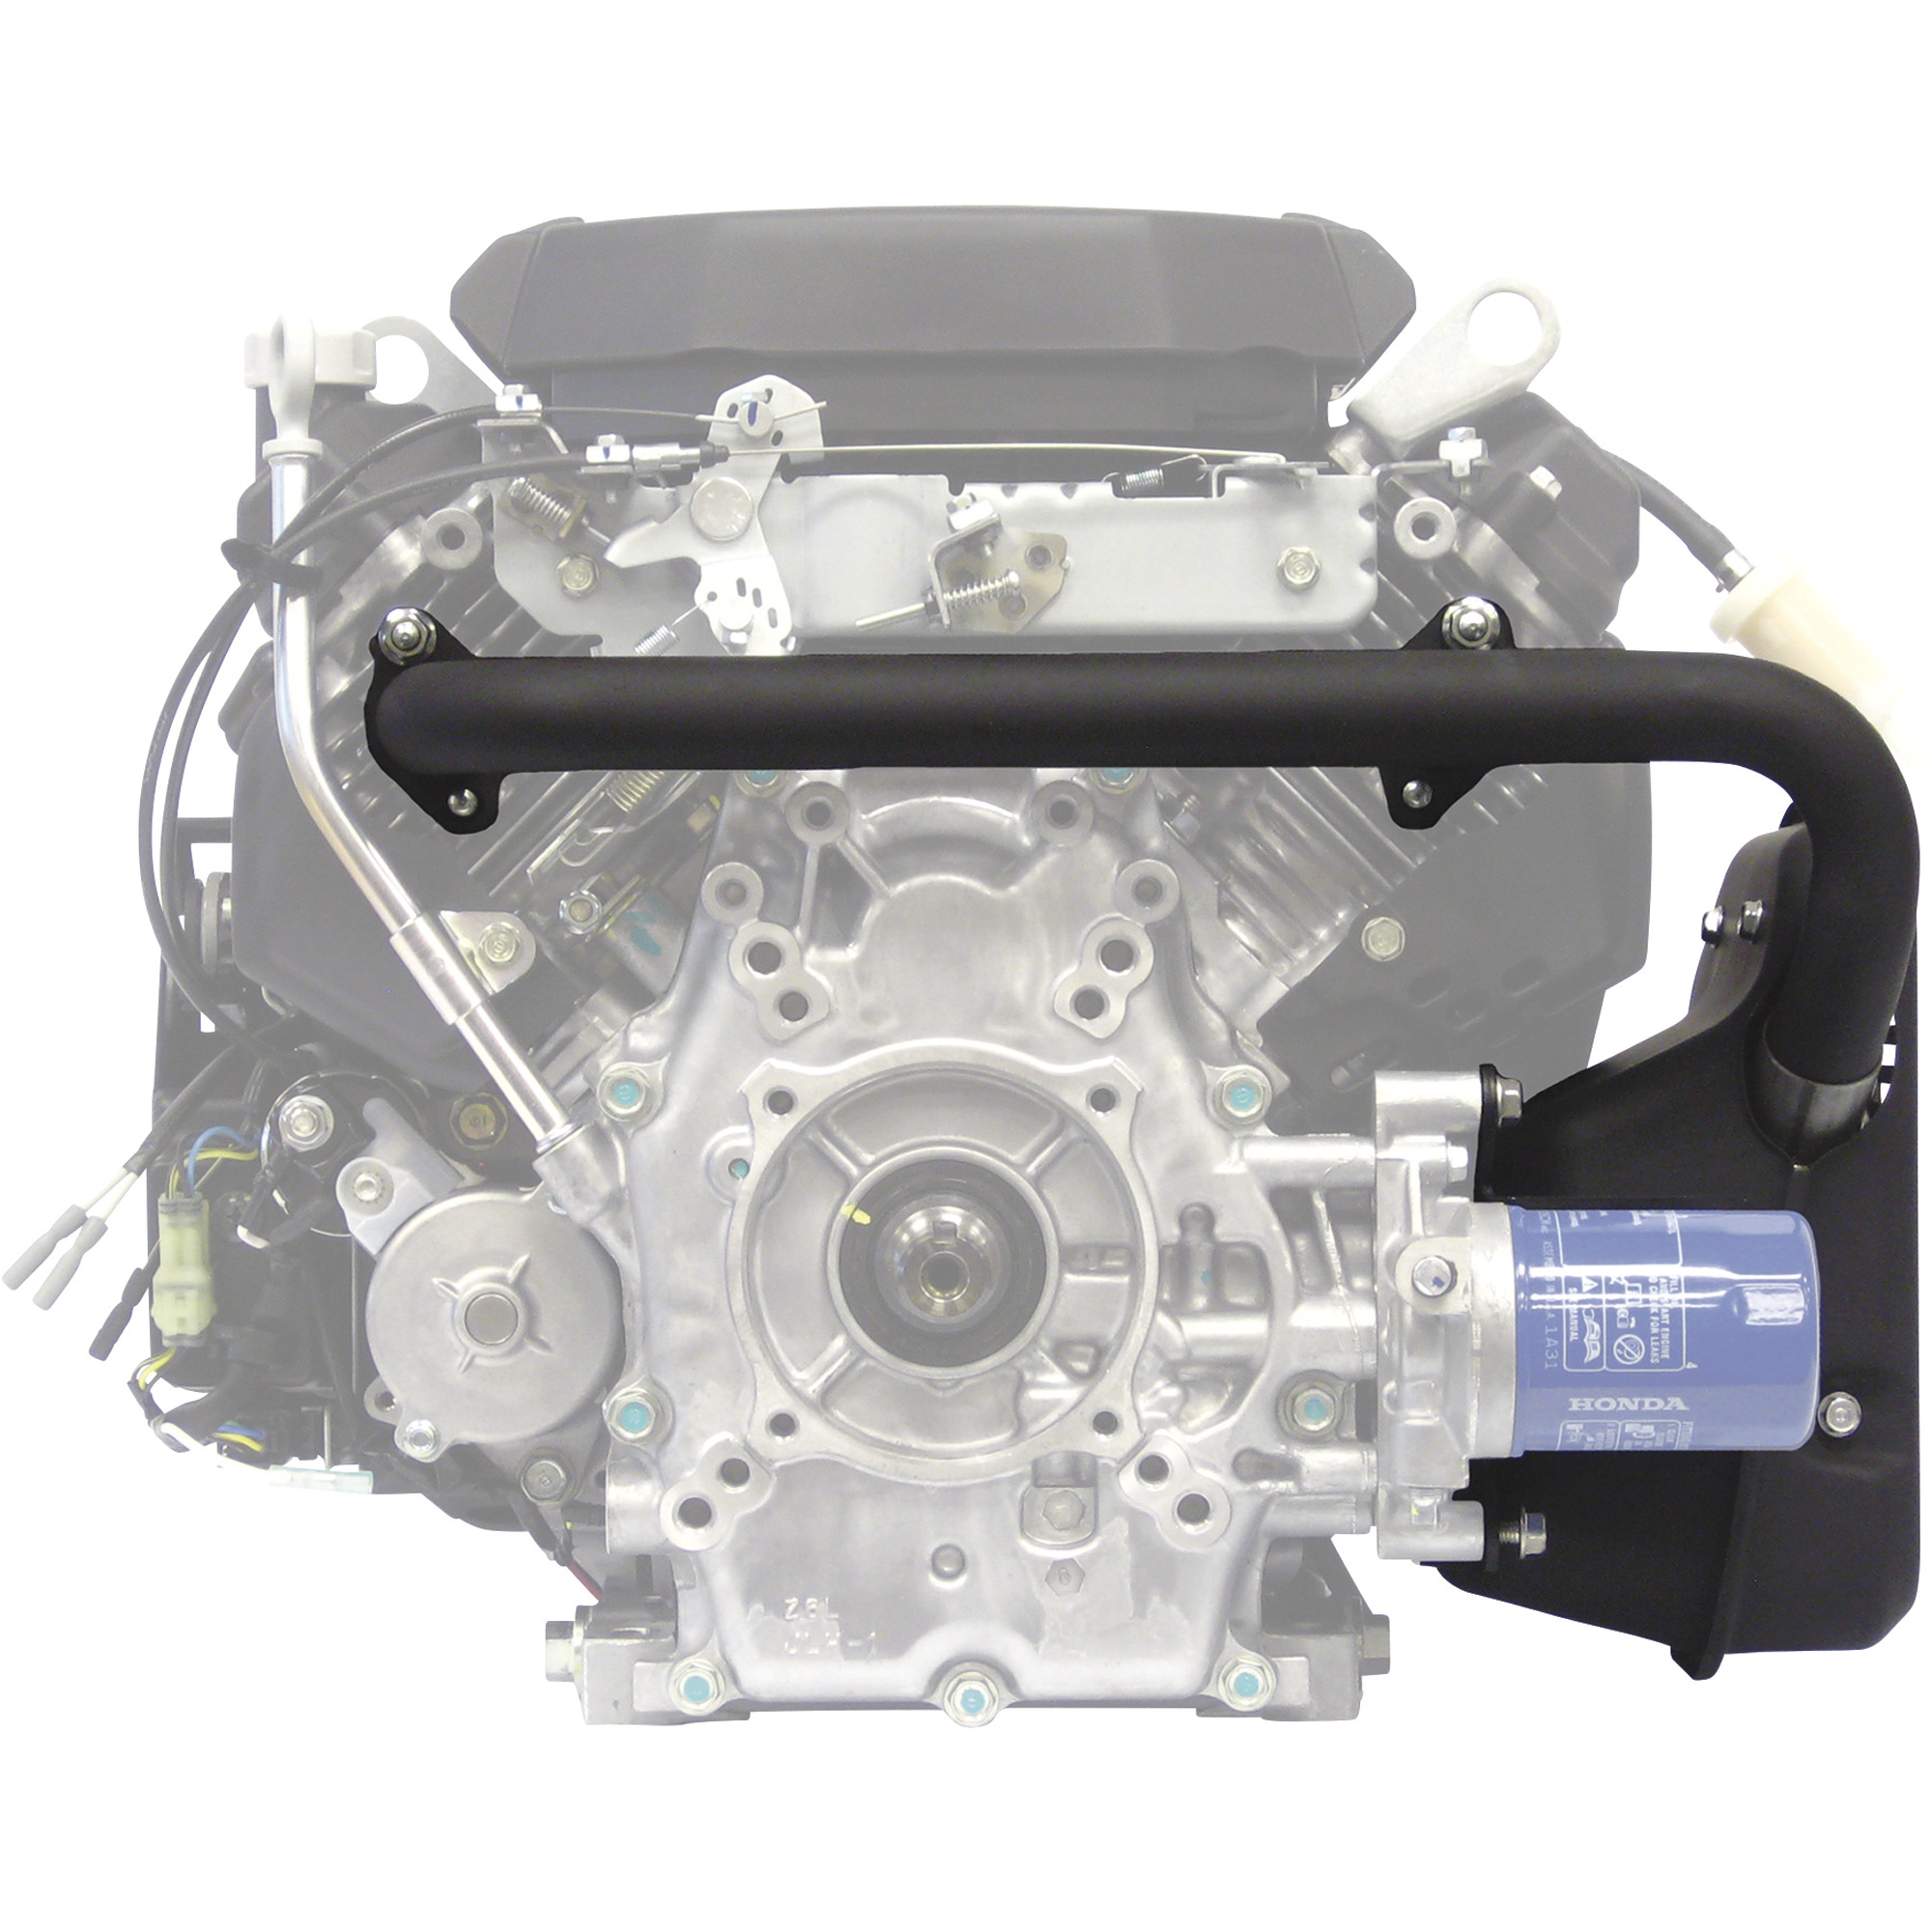 Honda Side-Mount Muffler â Fits Some GX630 Engines, Model V2MFLRSIDE